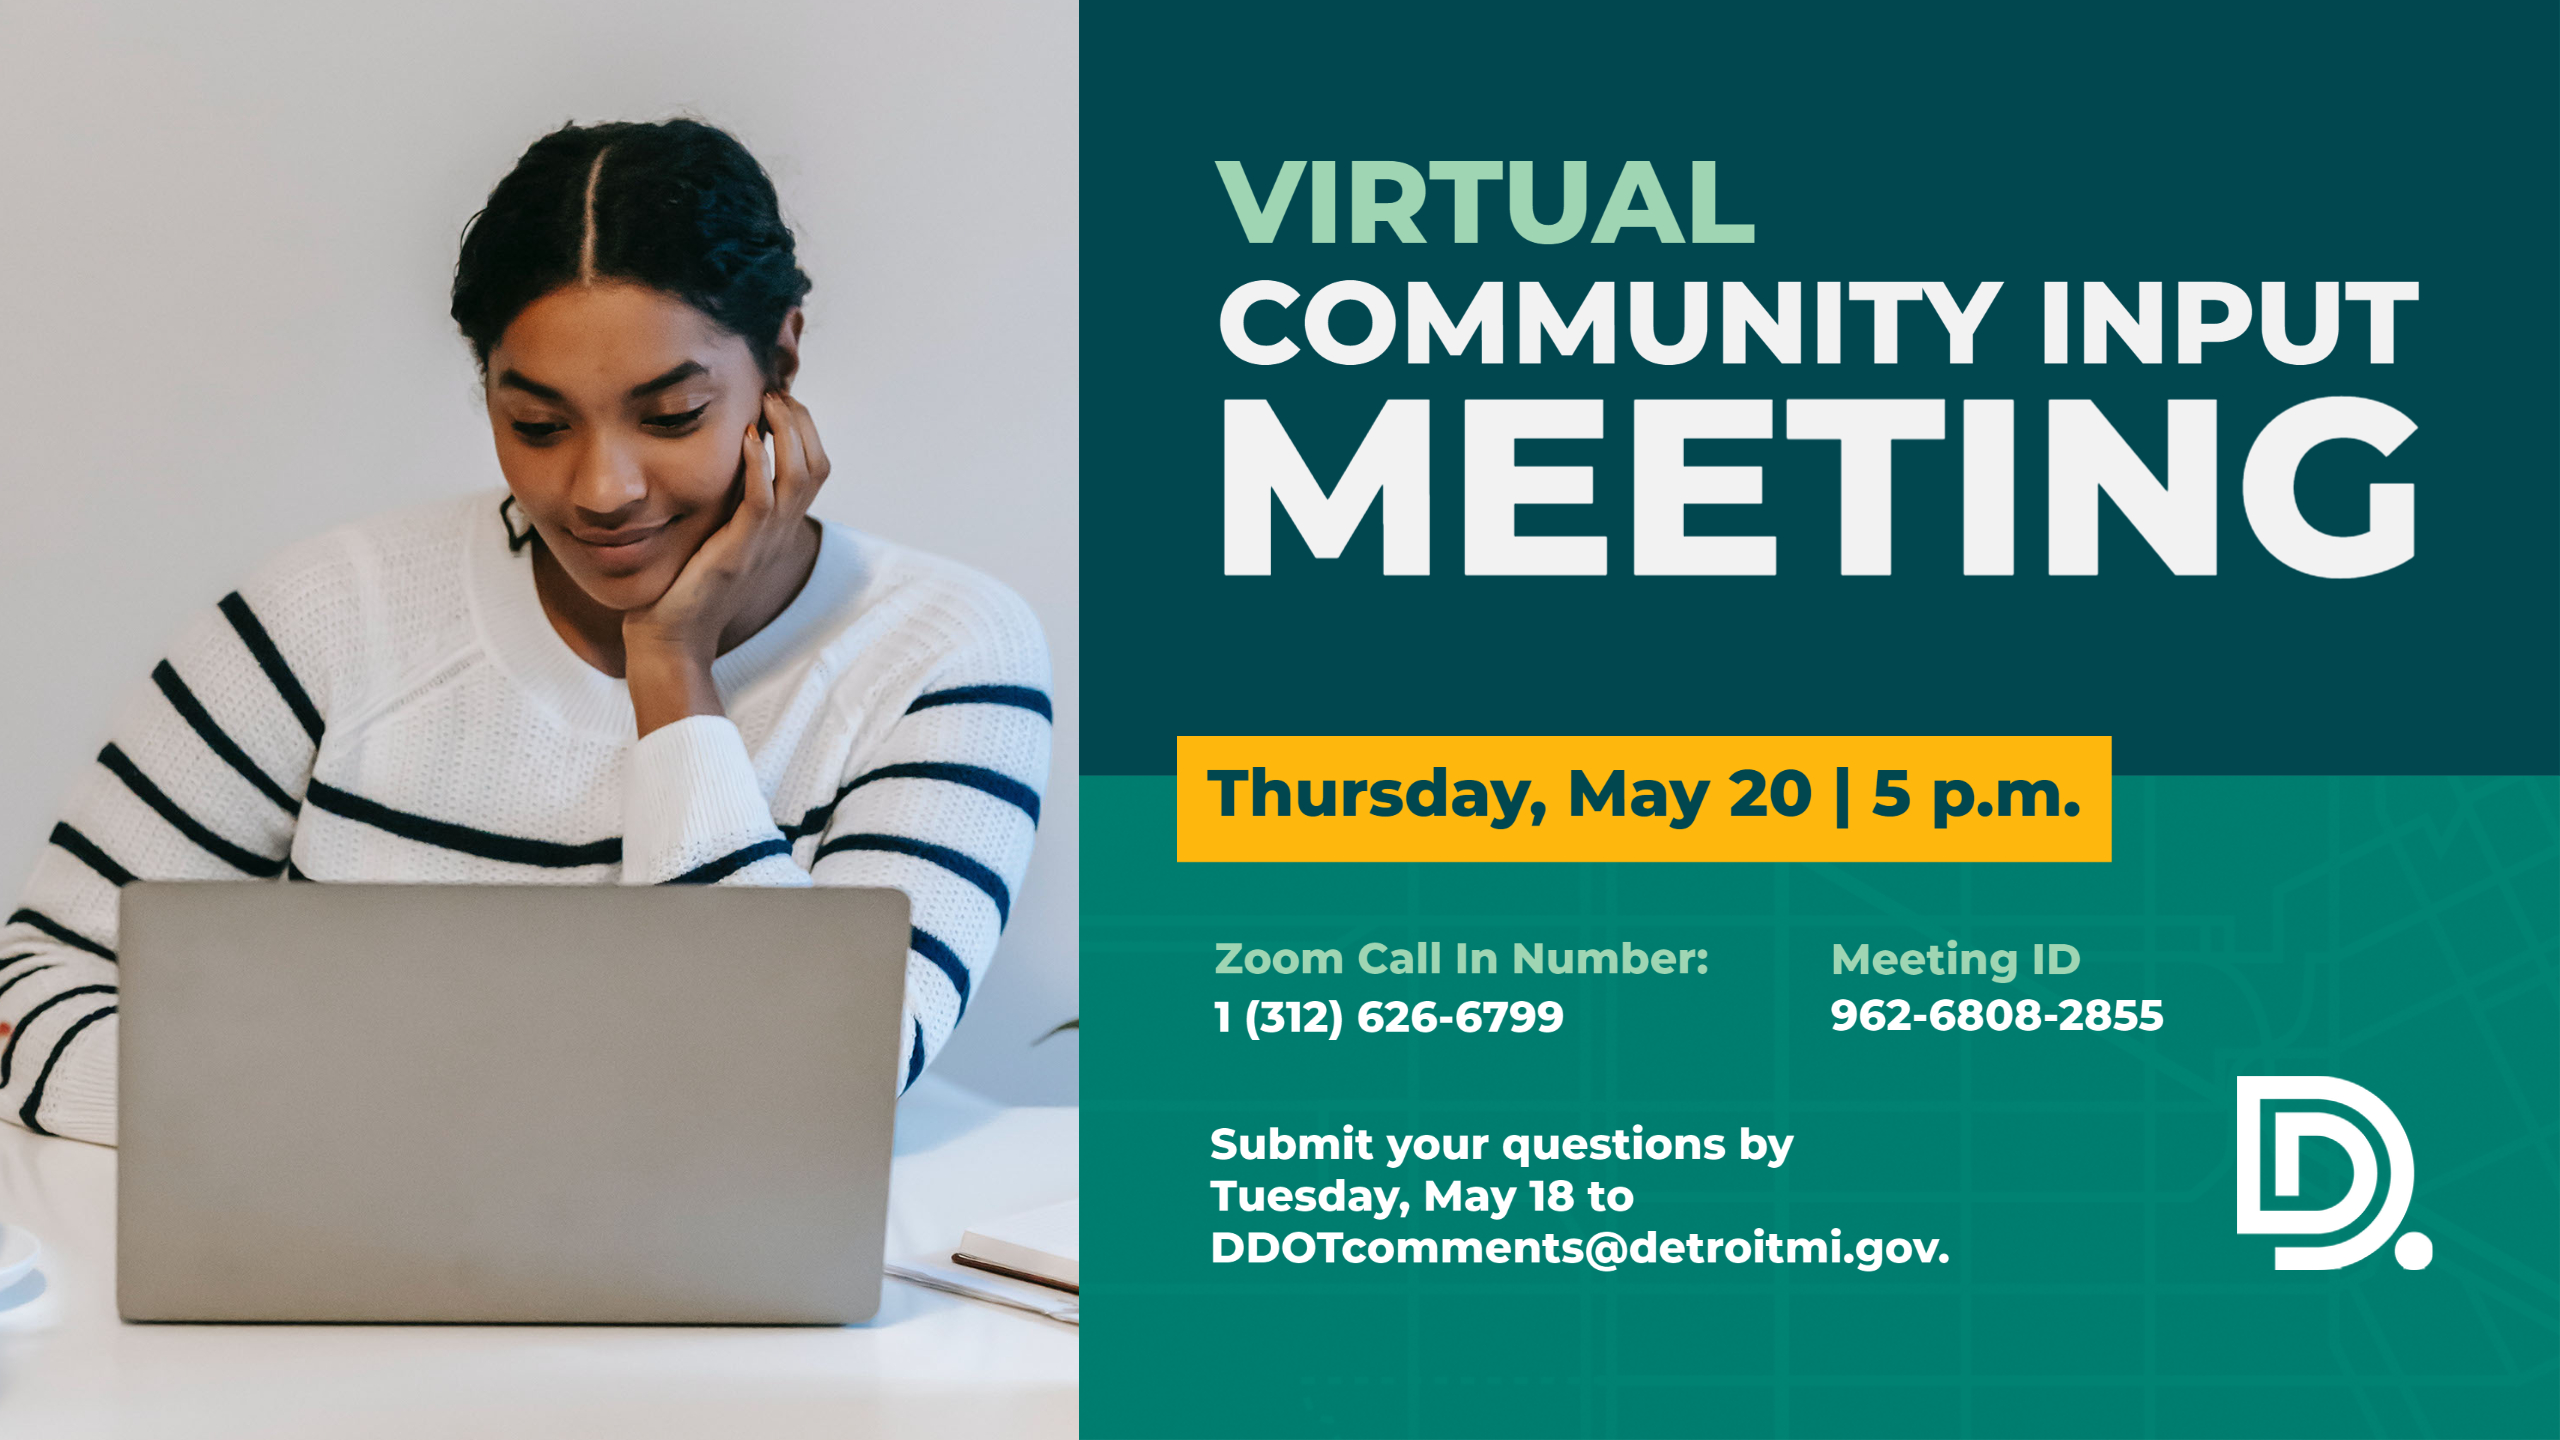 DDOT'S May Community Input Meeting